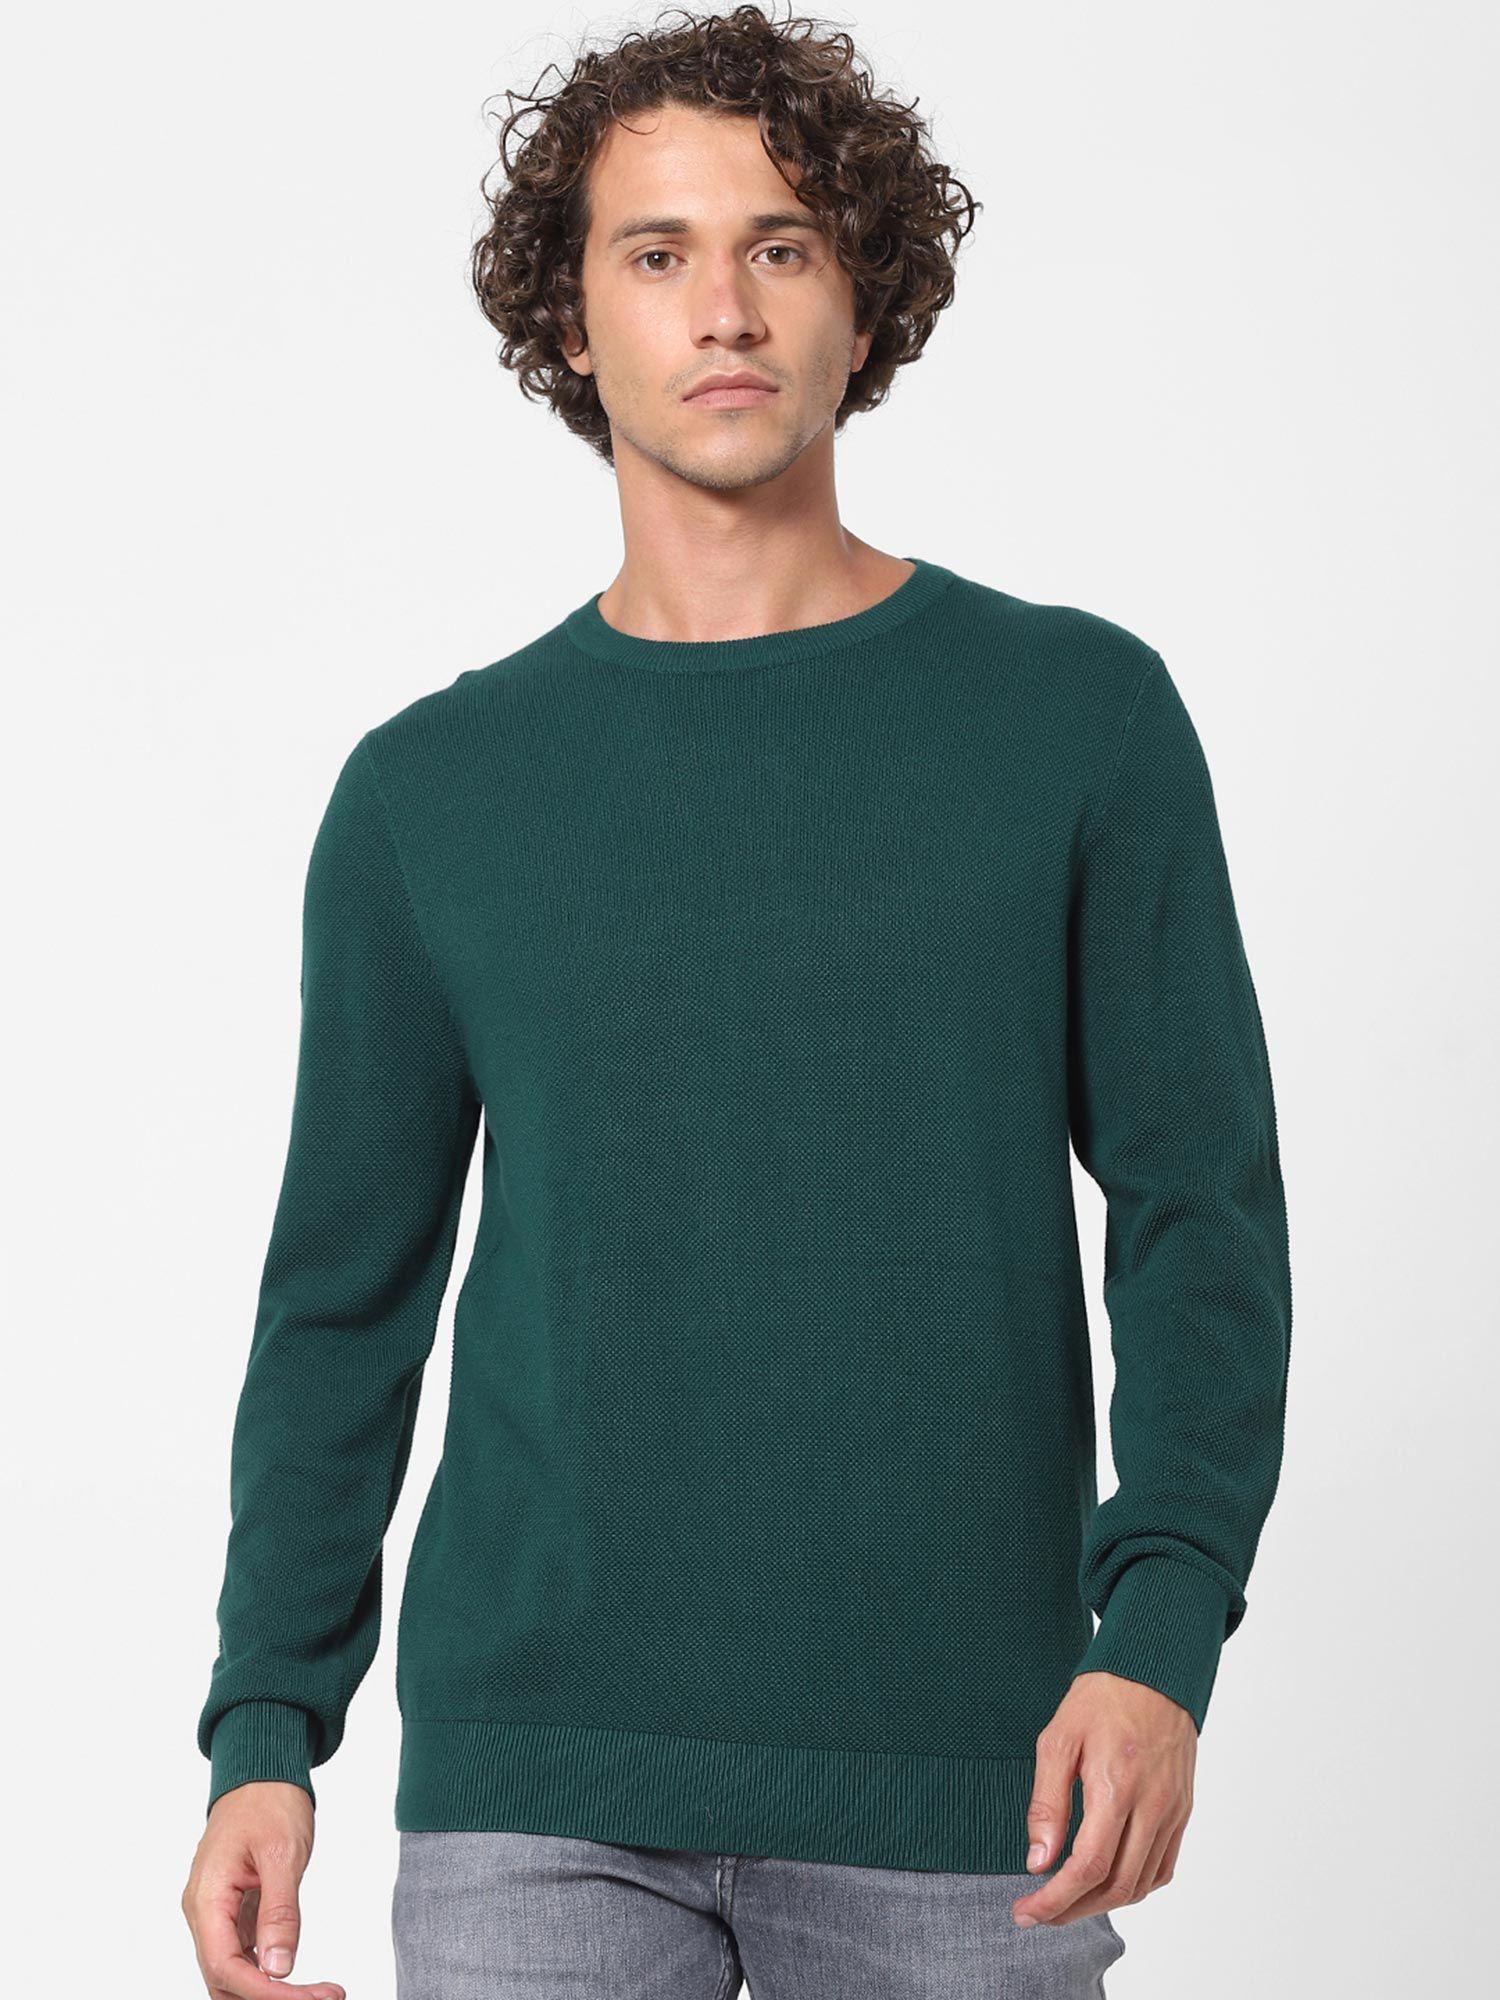 men's-green-sweaters